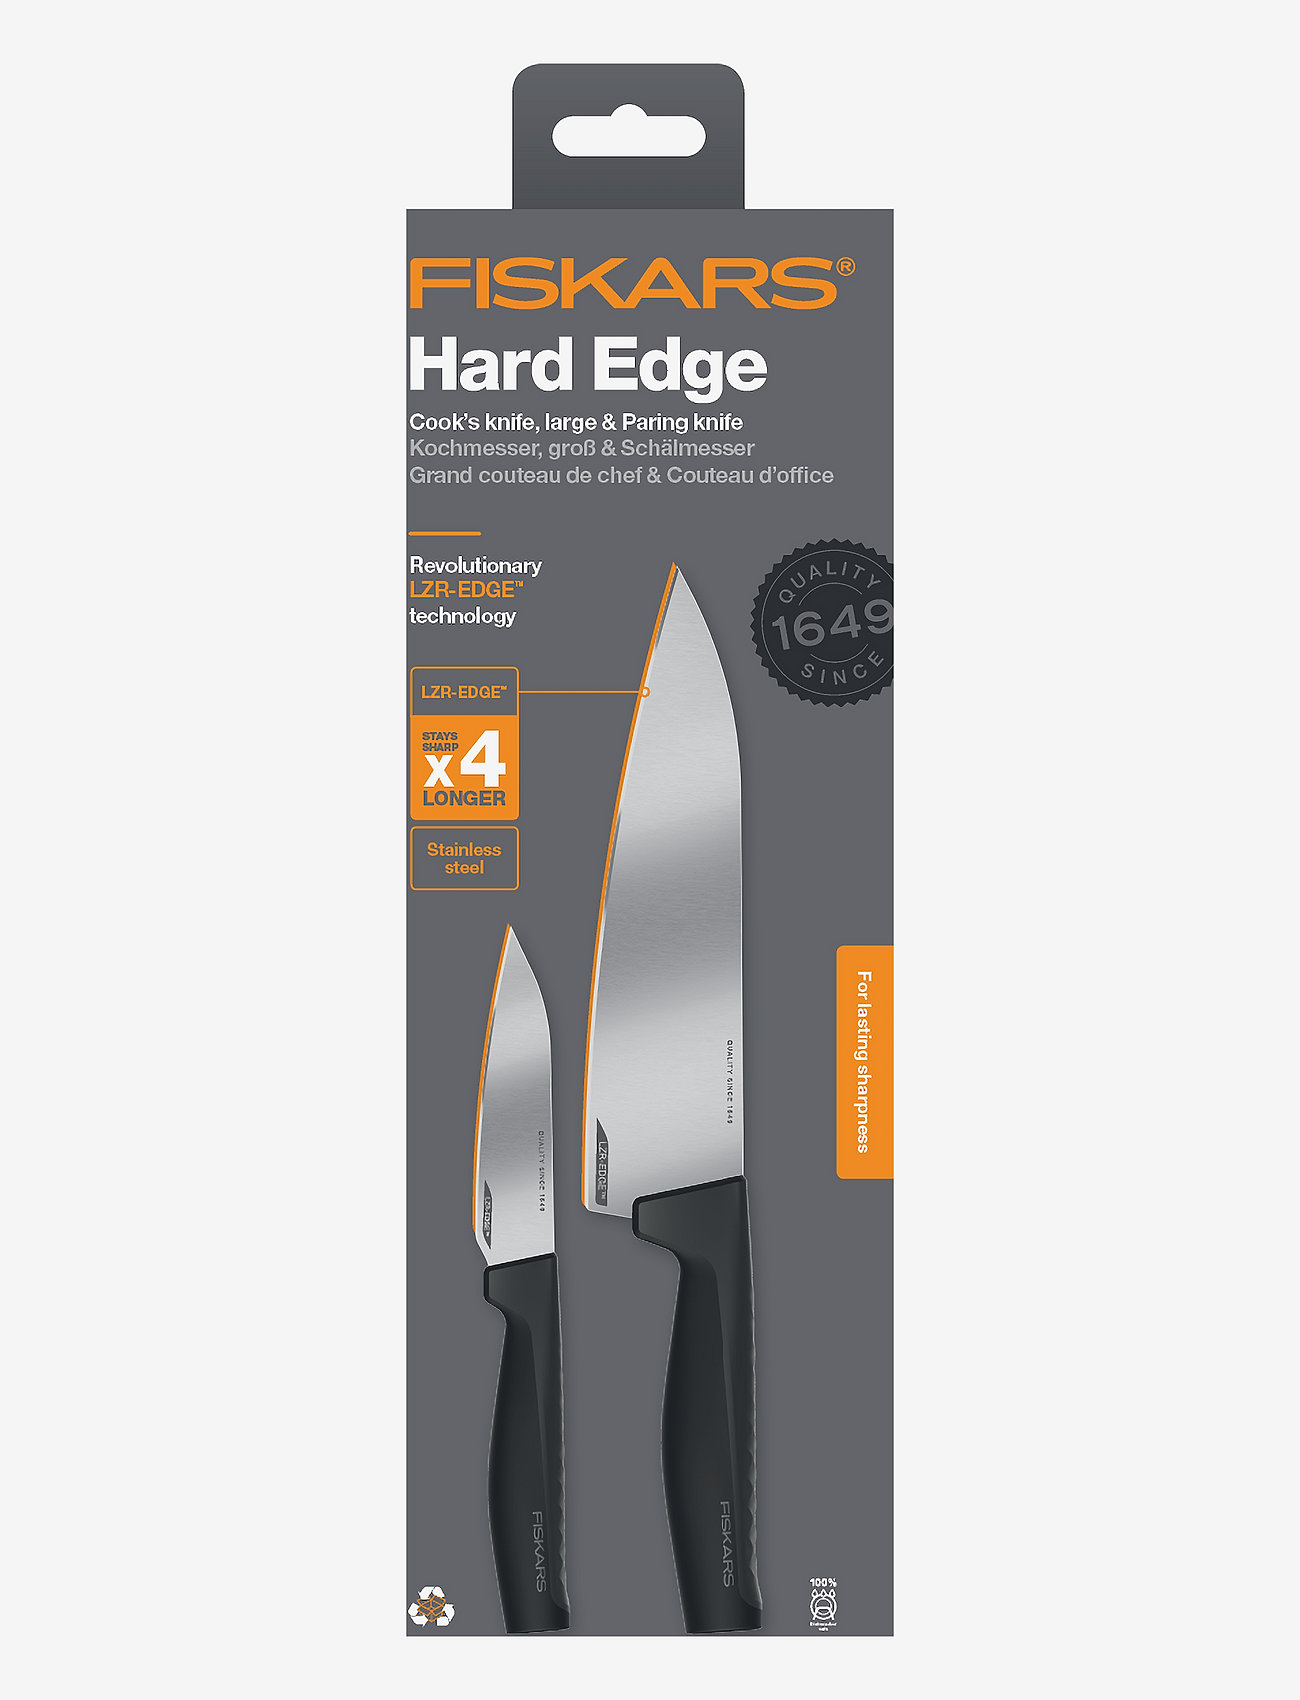 Fiskars - Hard Edge Knivset 2 parts - large chef knife & vegetable knife - kochmesser - black - 1